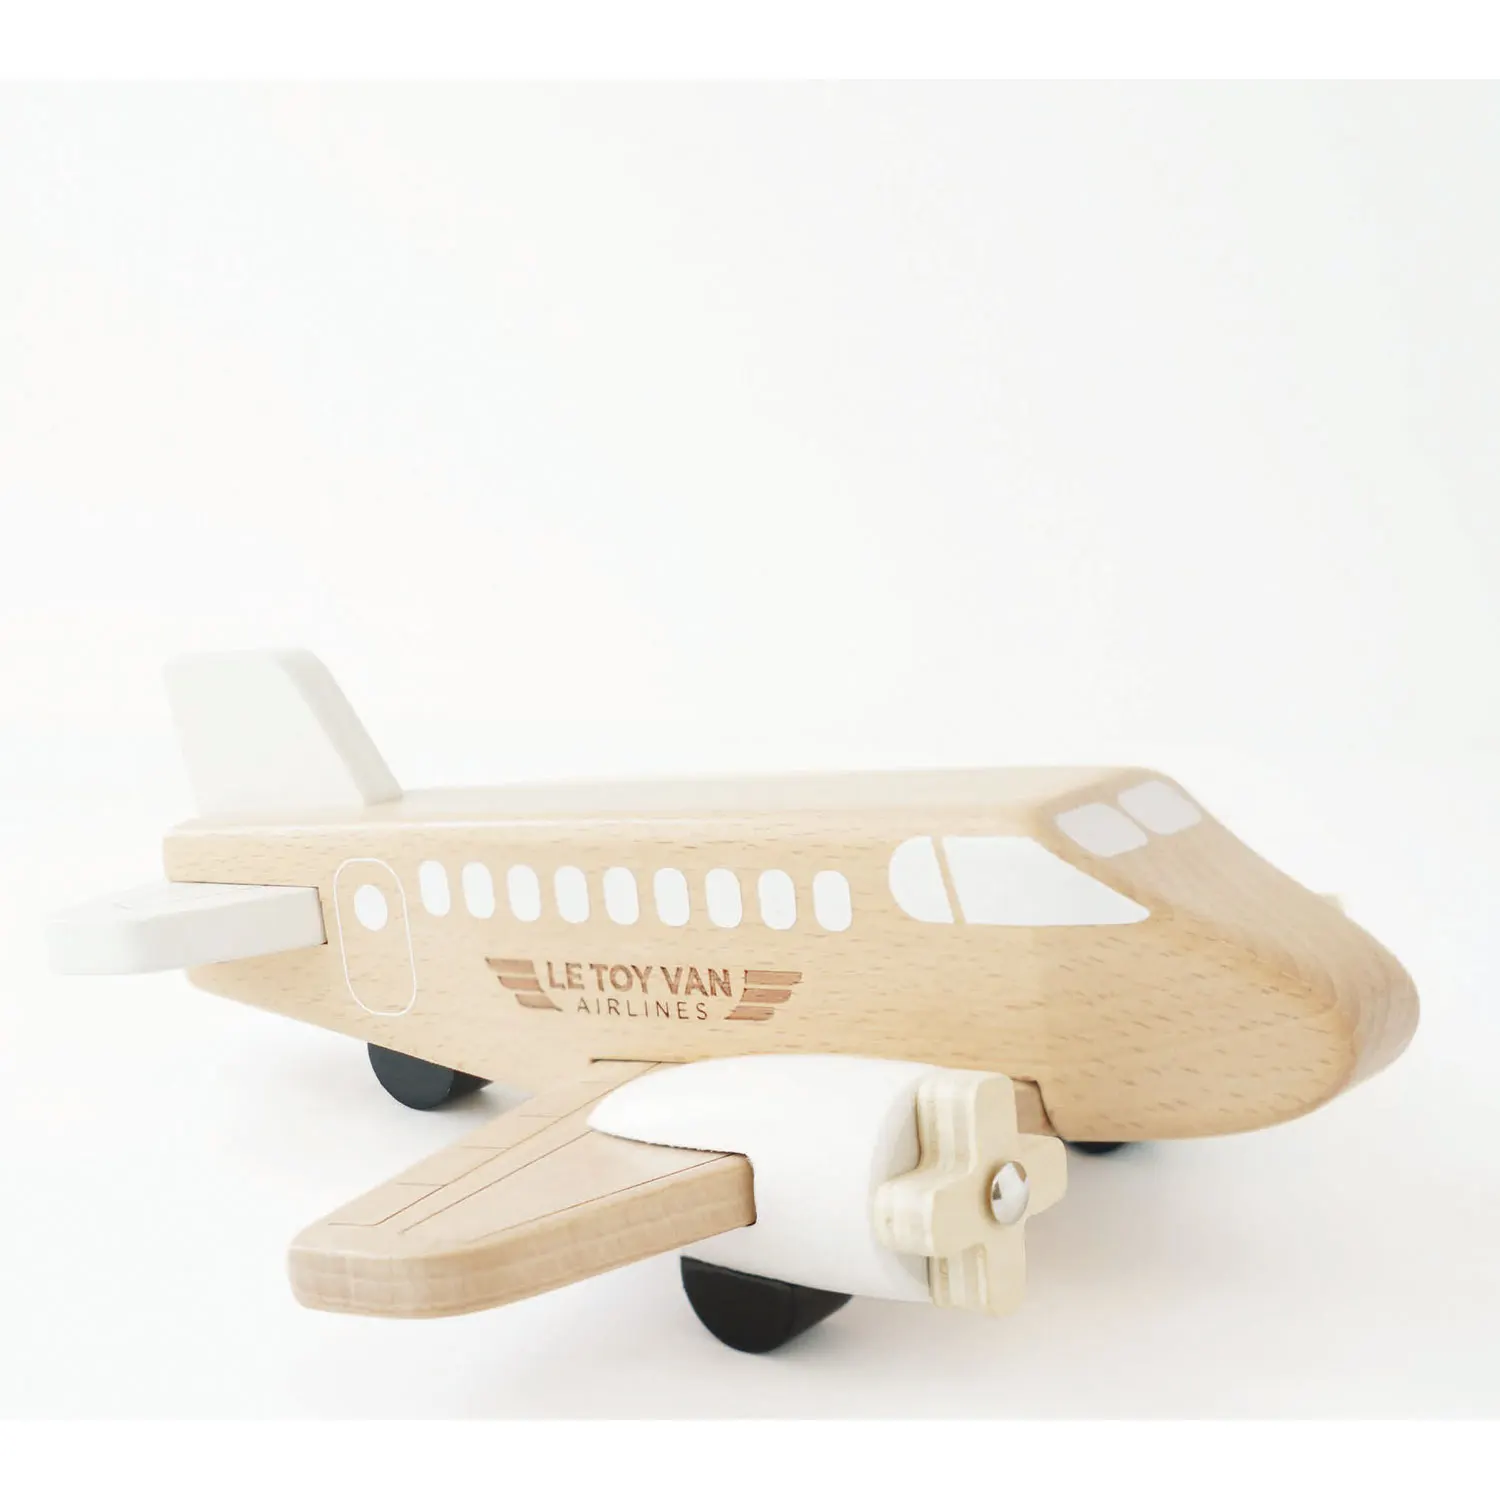 Flugzeug aus Holz / Wooden Toy Plane